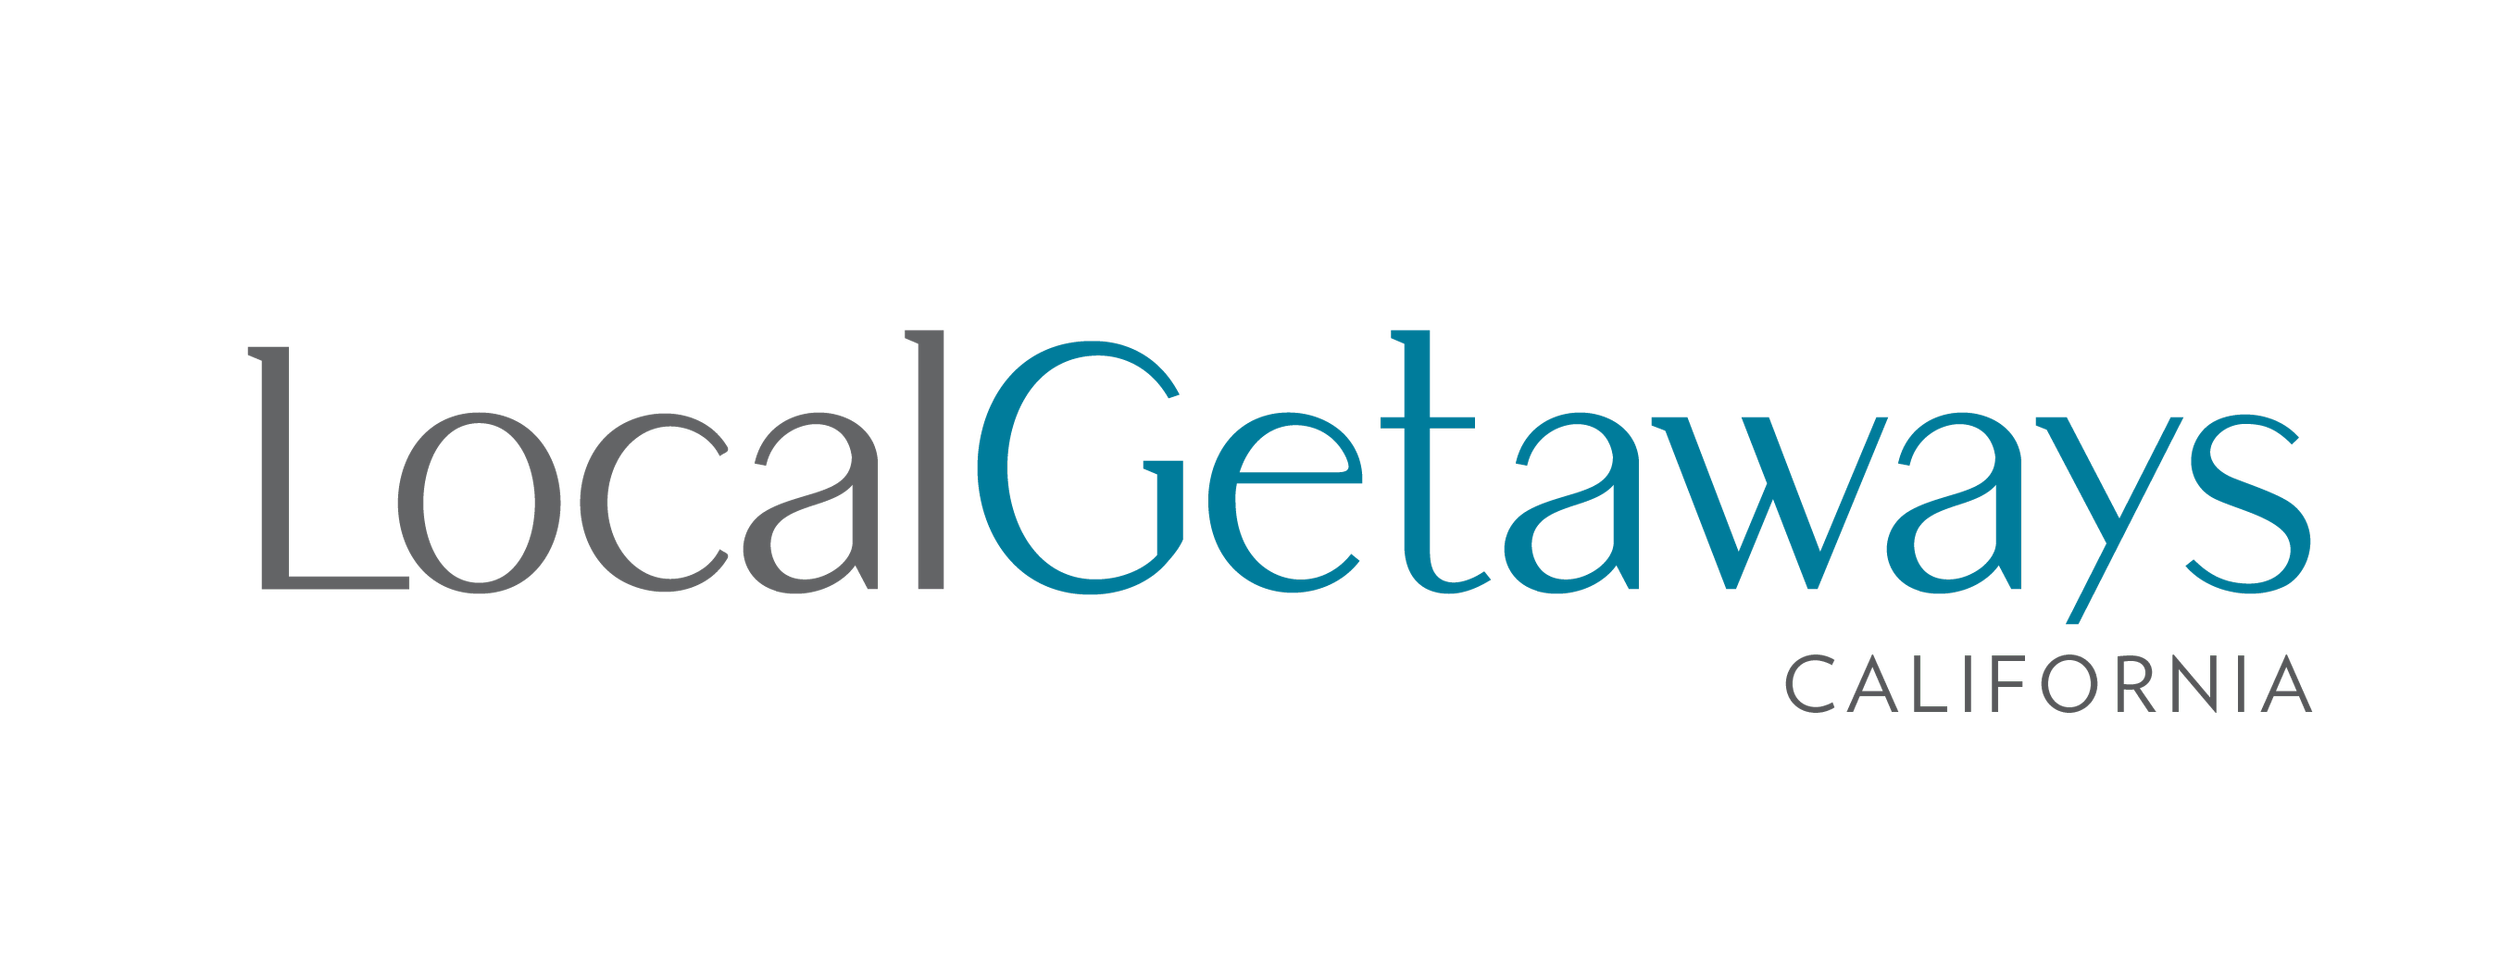 Local Getaways logo.png